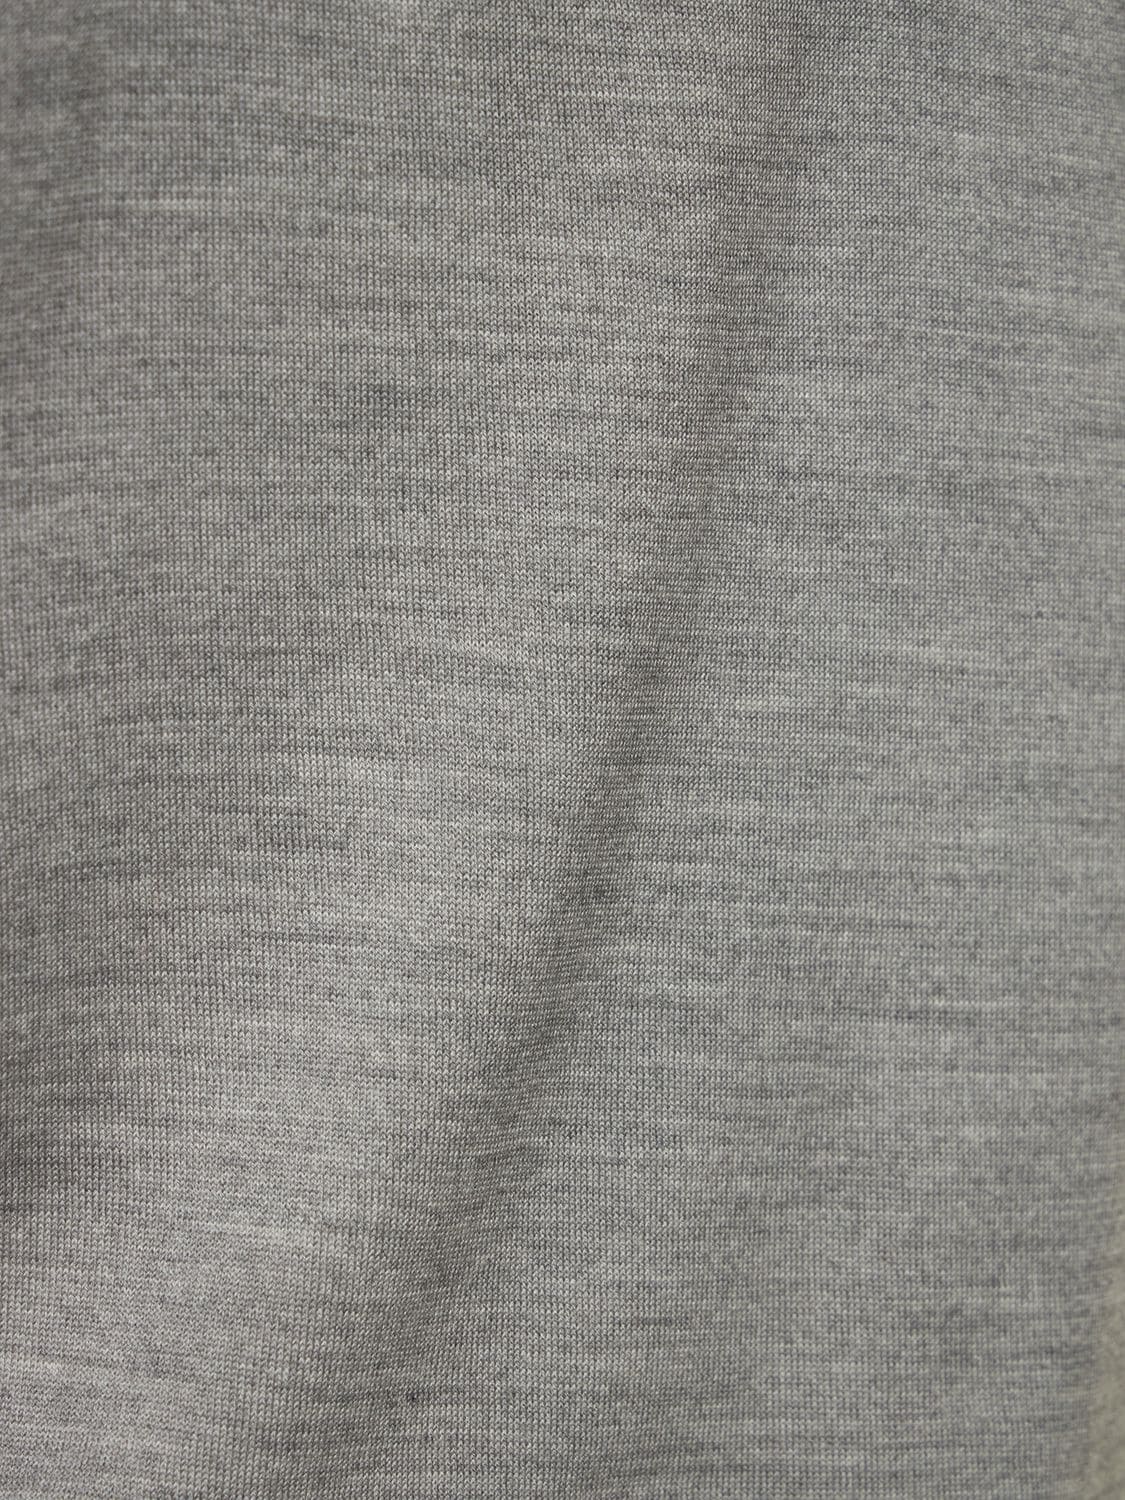 Shop Tom Ford Fine Gauge Wool Roll Neck Sweater In Light Grey